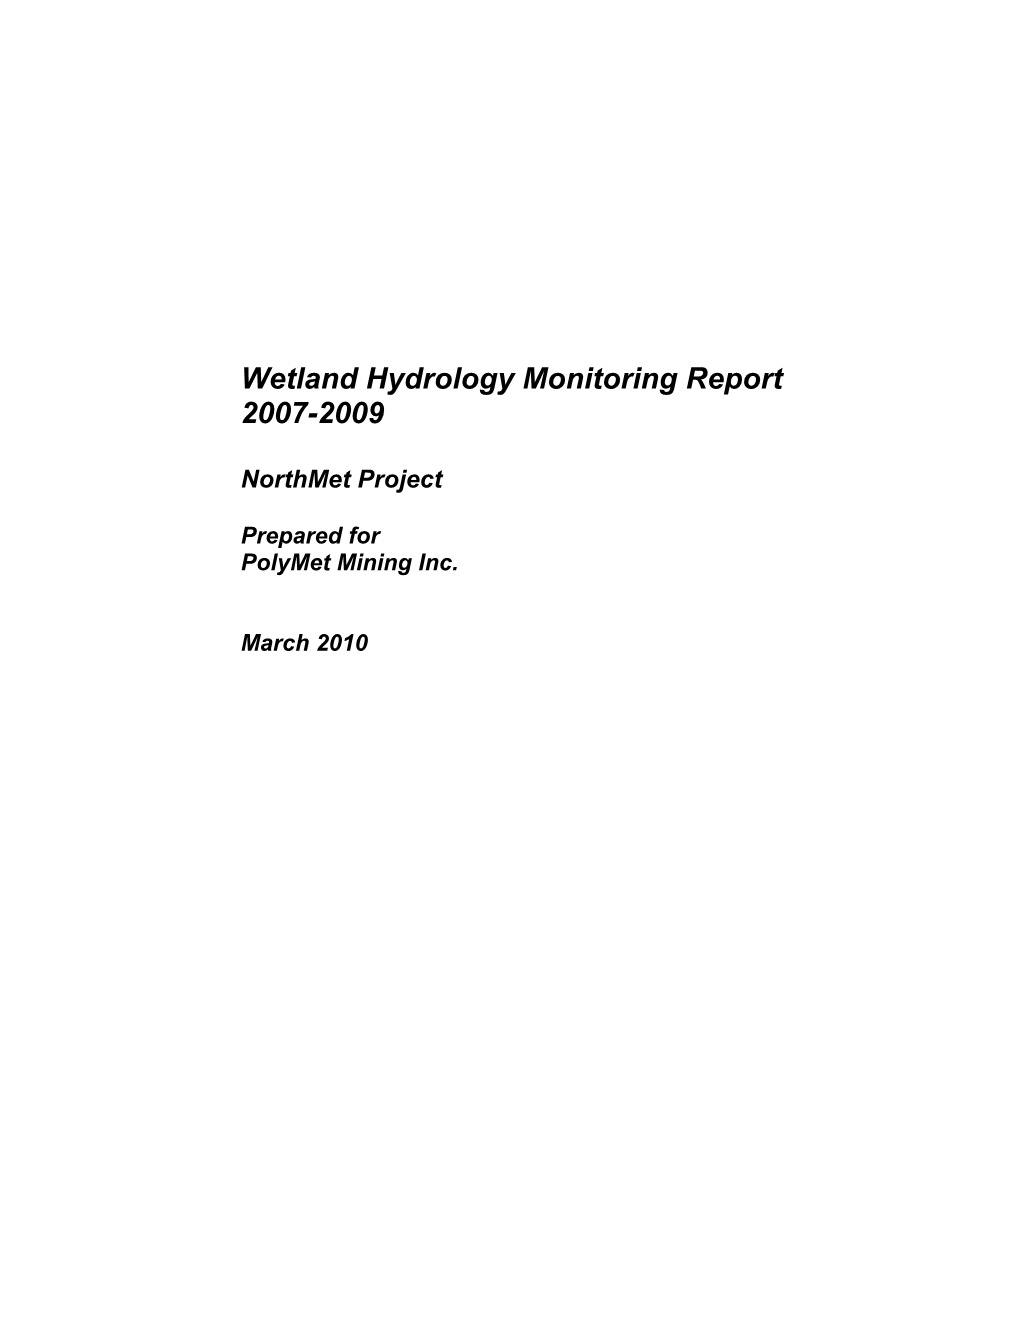 Wetland Hydrology Monitoring Report 2007-2009